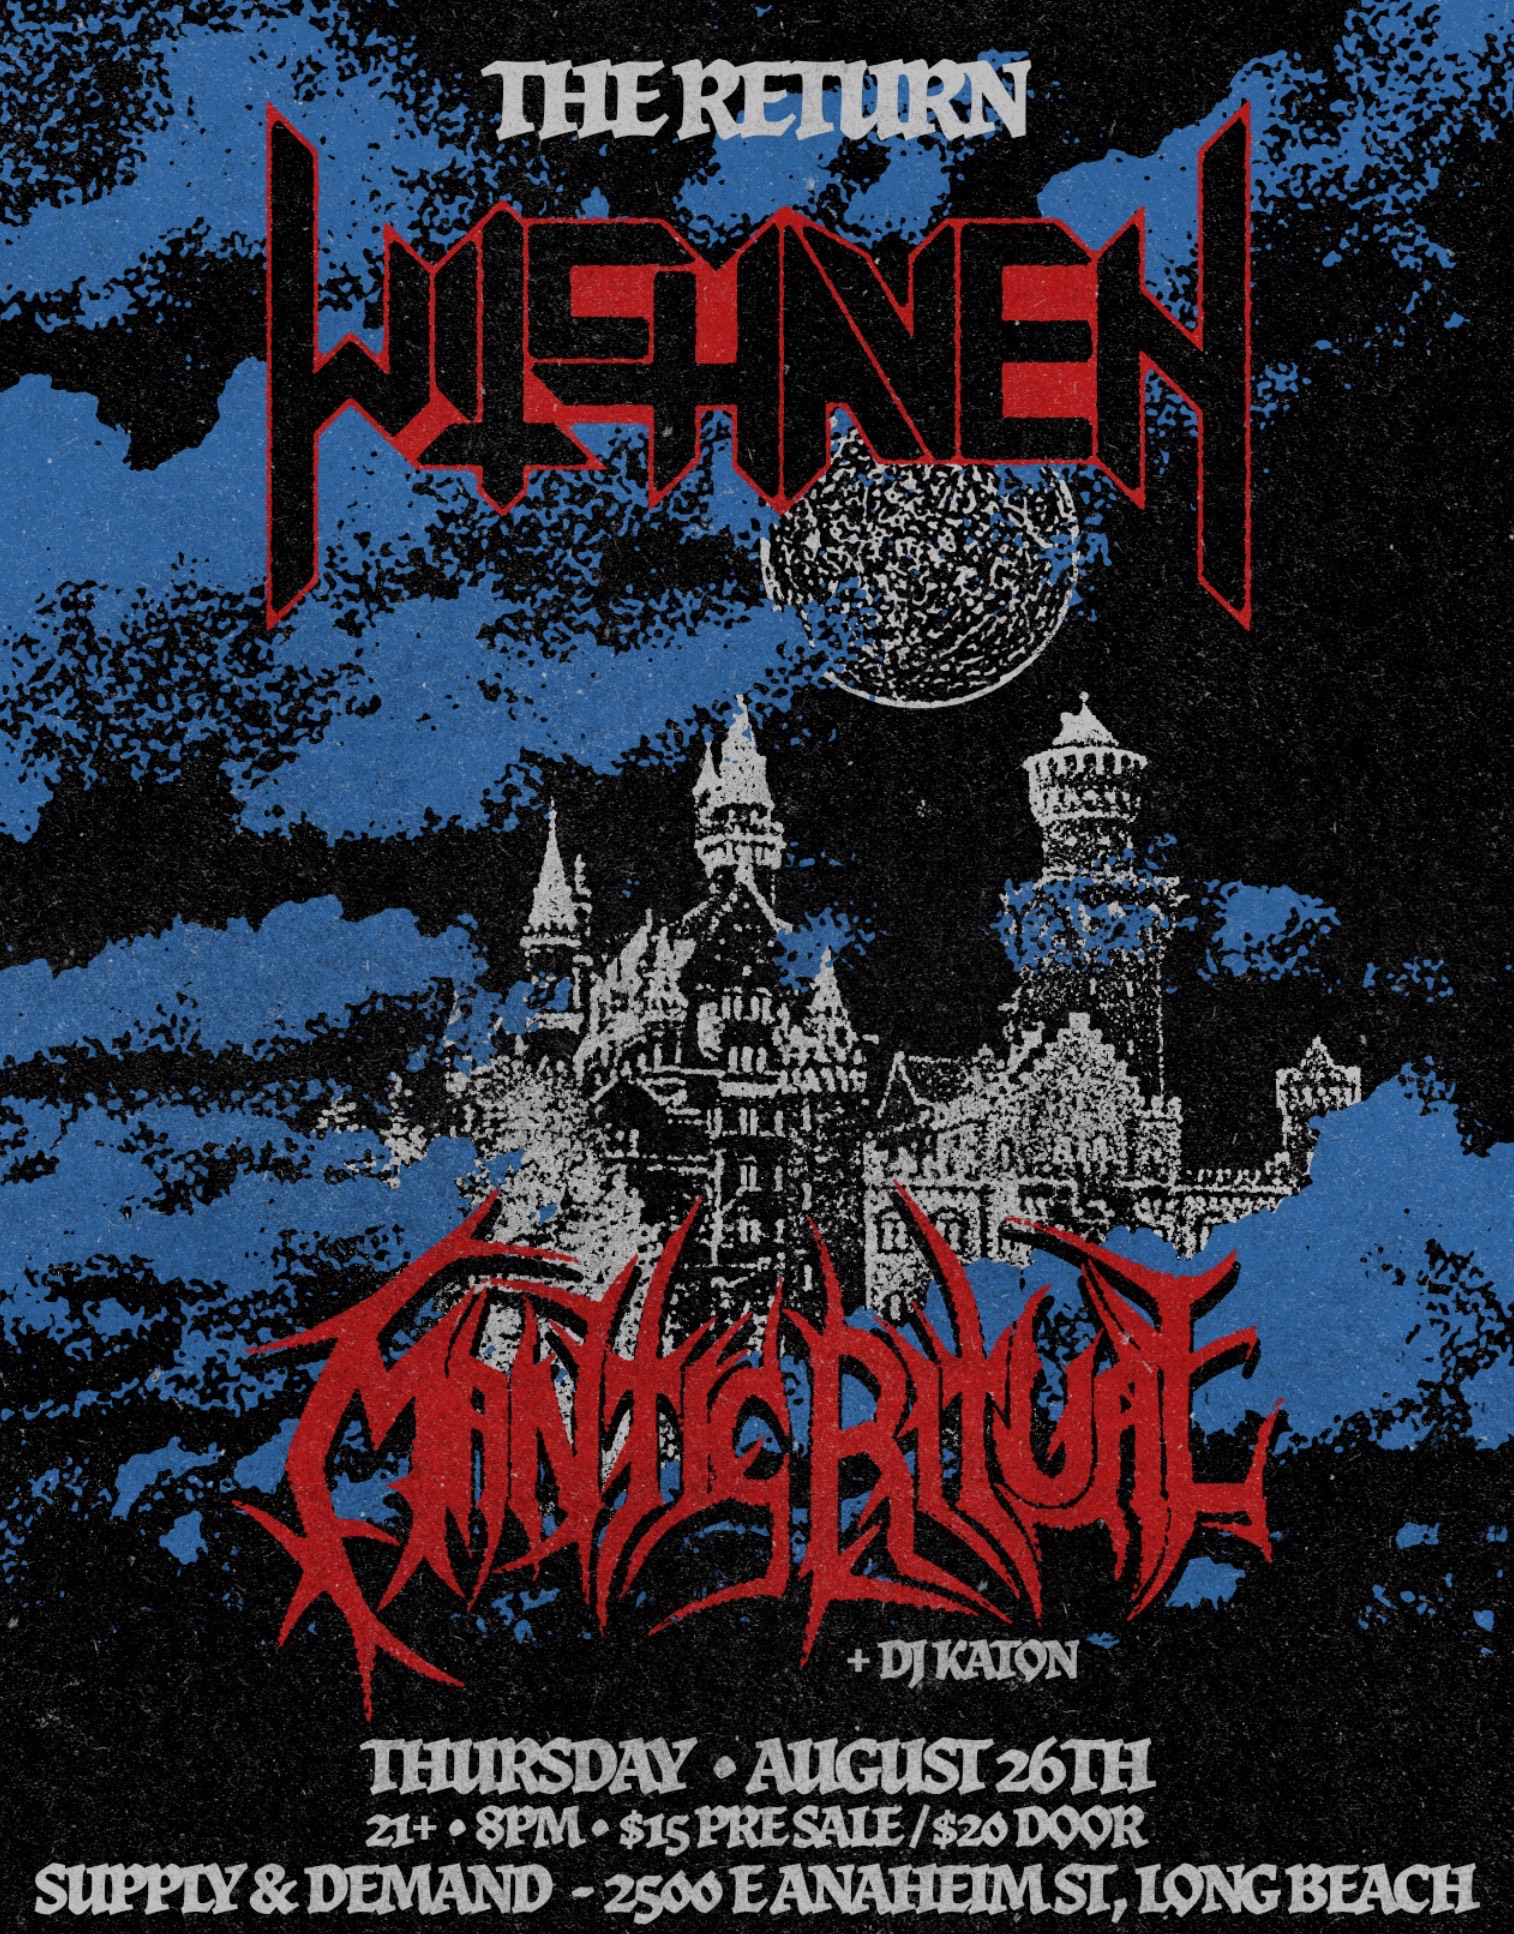 Witchaven, Mantic Ritual, DJ Katon (Hirax)